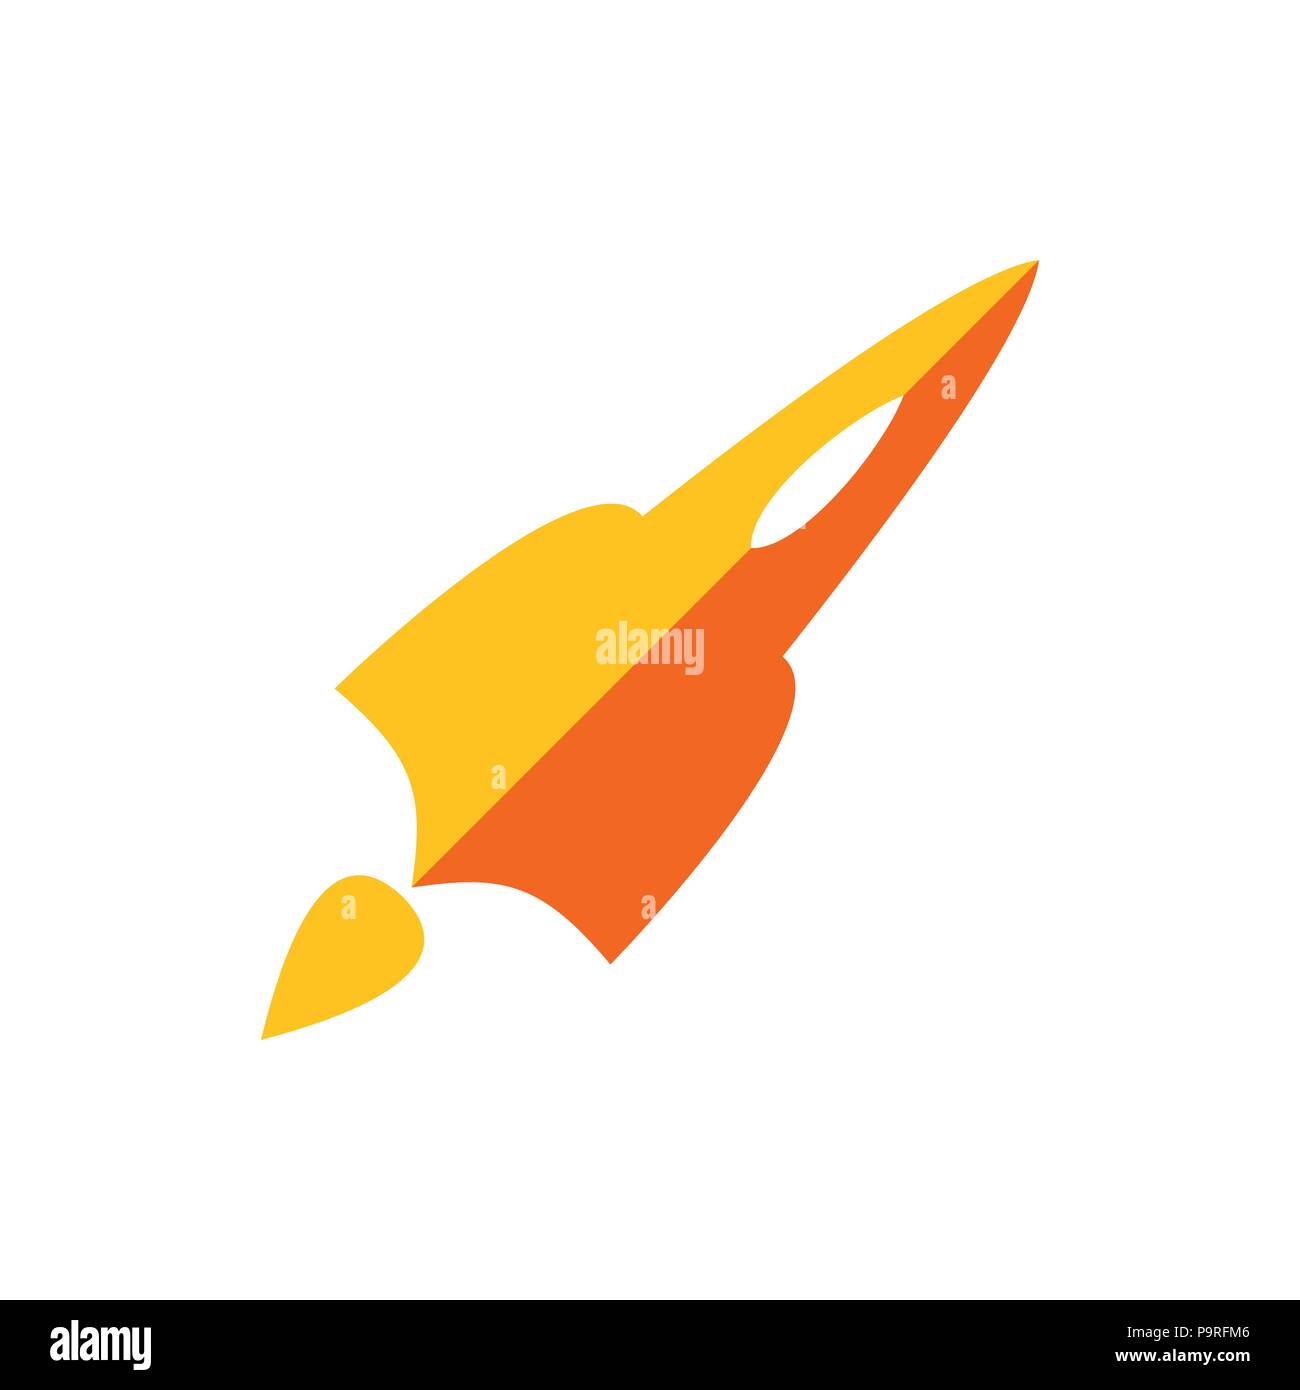 Simple Orange Rocket Air Plane Vector Symbol Graphic Logo Design Template Stock Vector